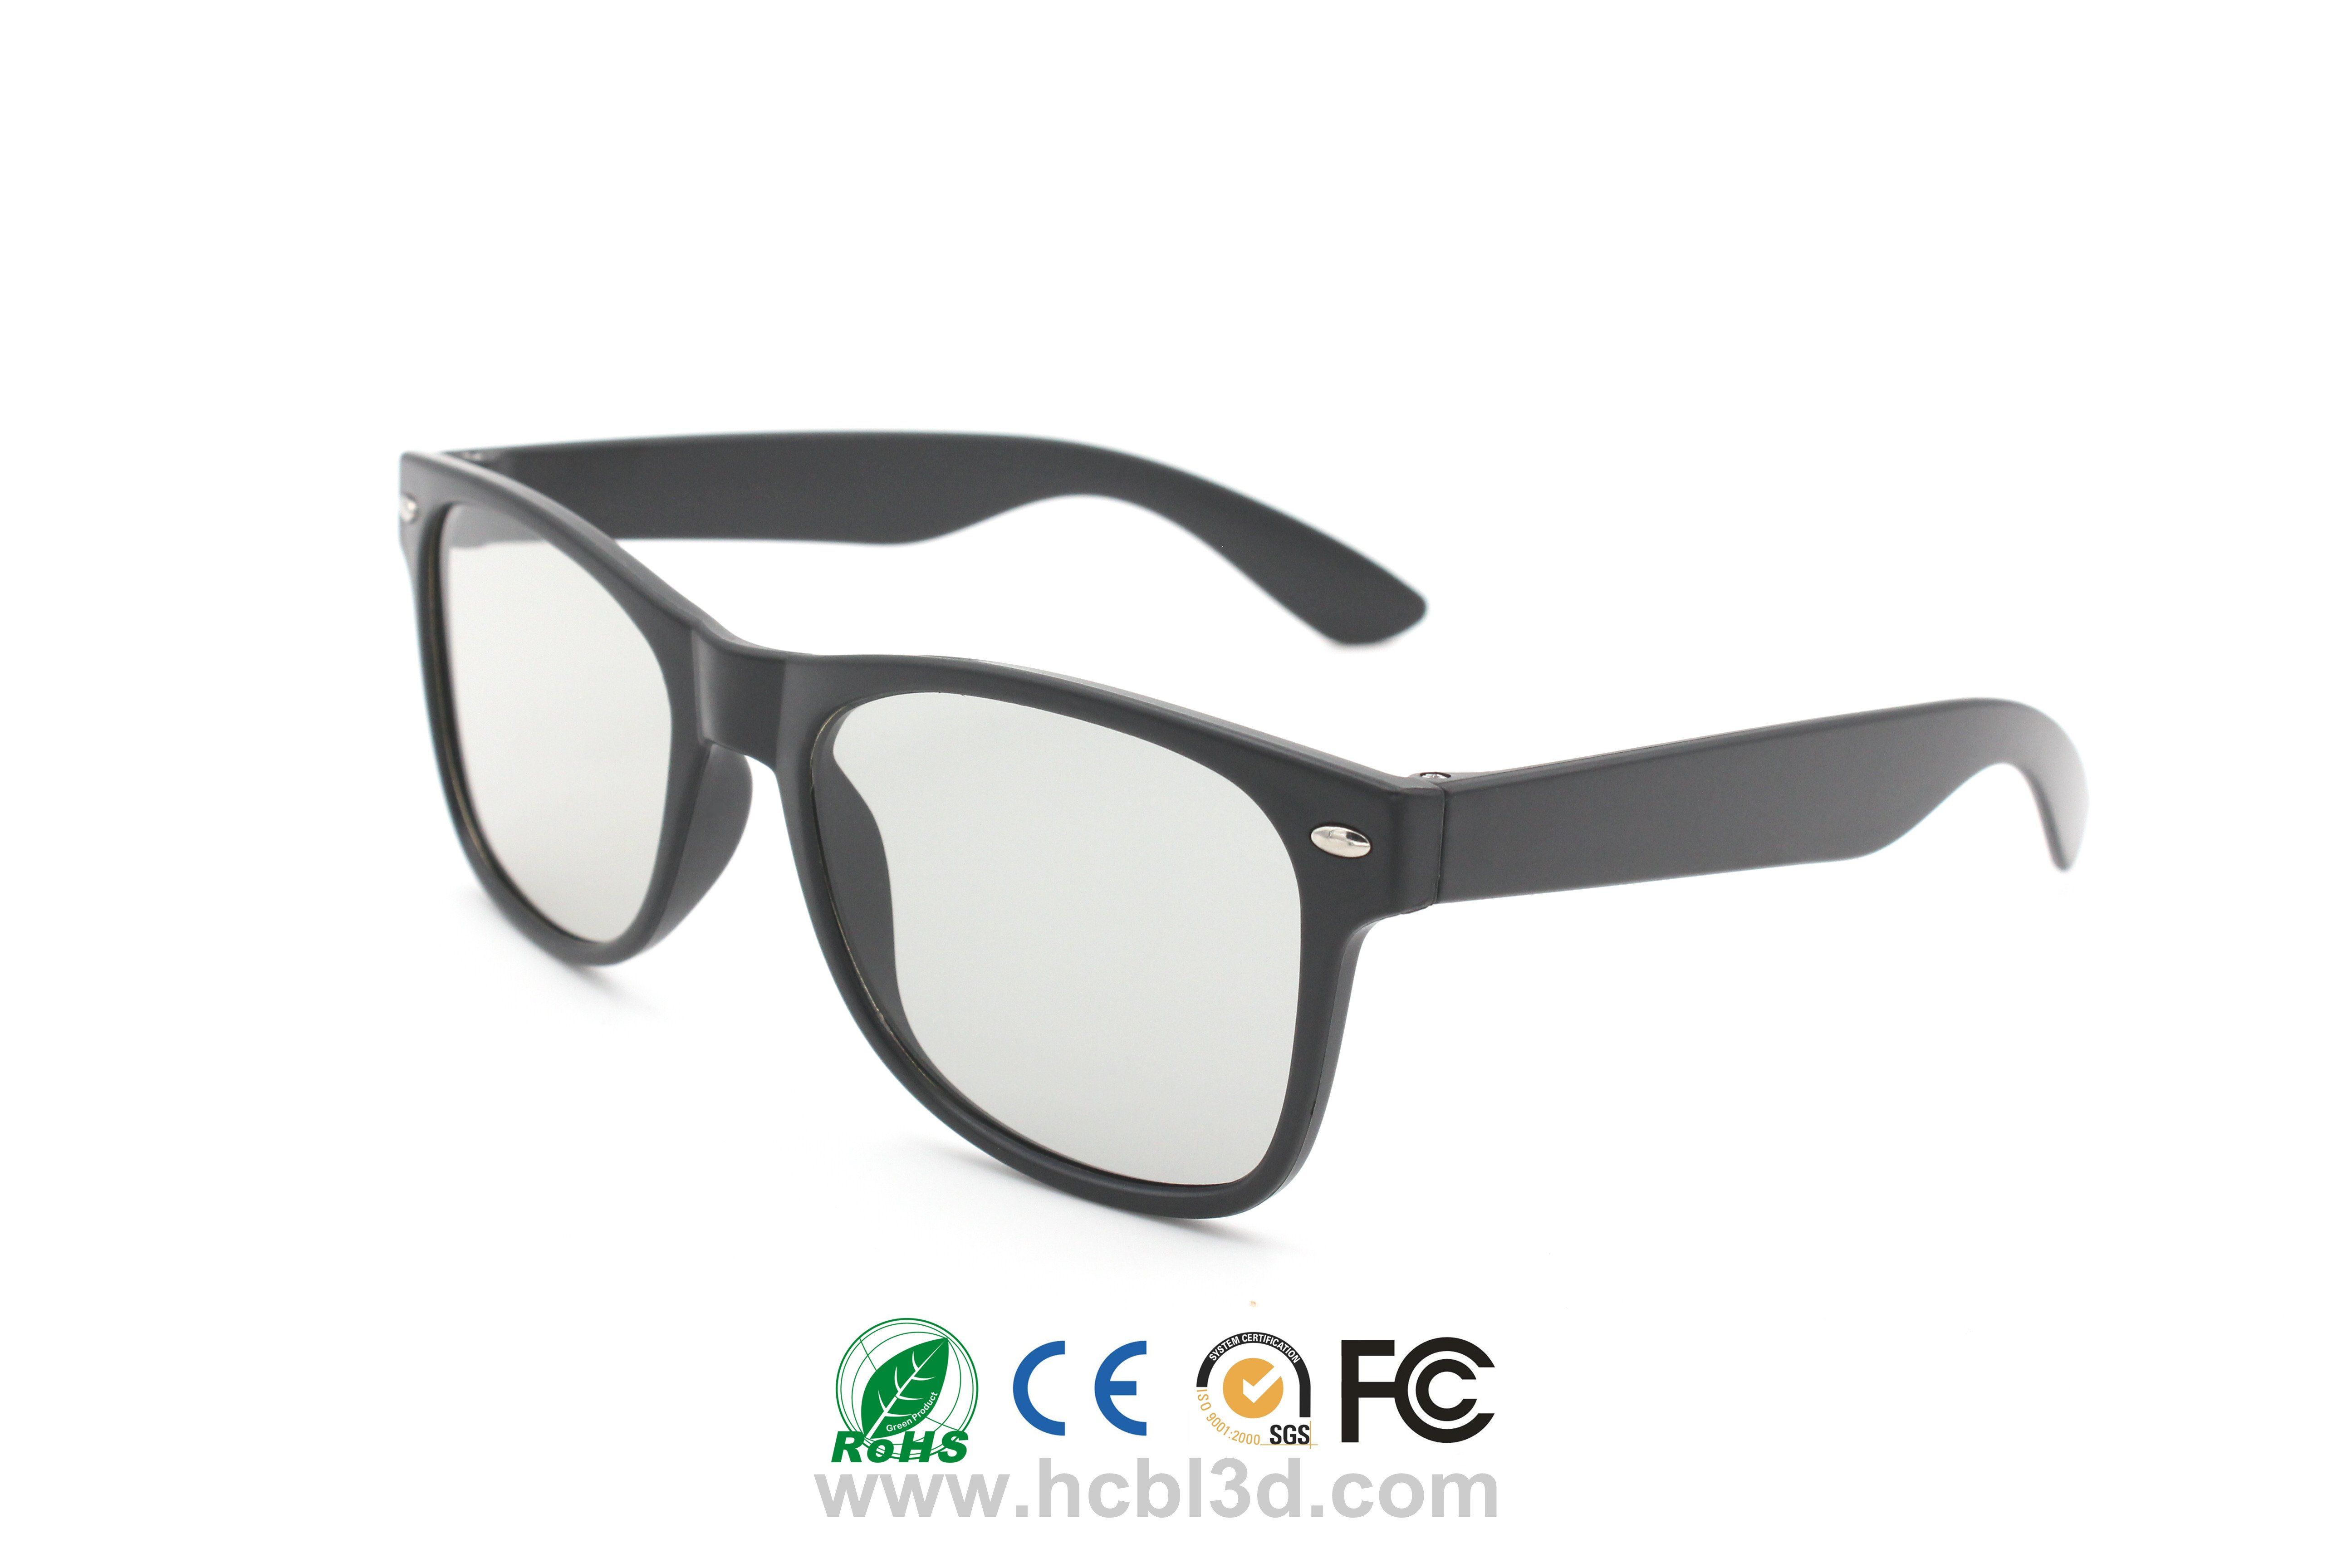 Gafas 3D polarizadas reutilizables para altamente rentables.